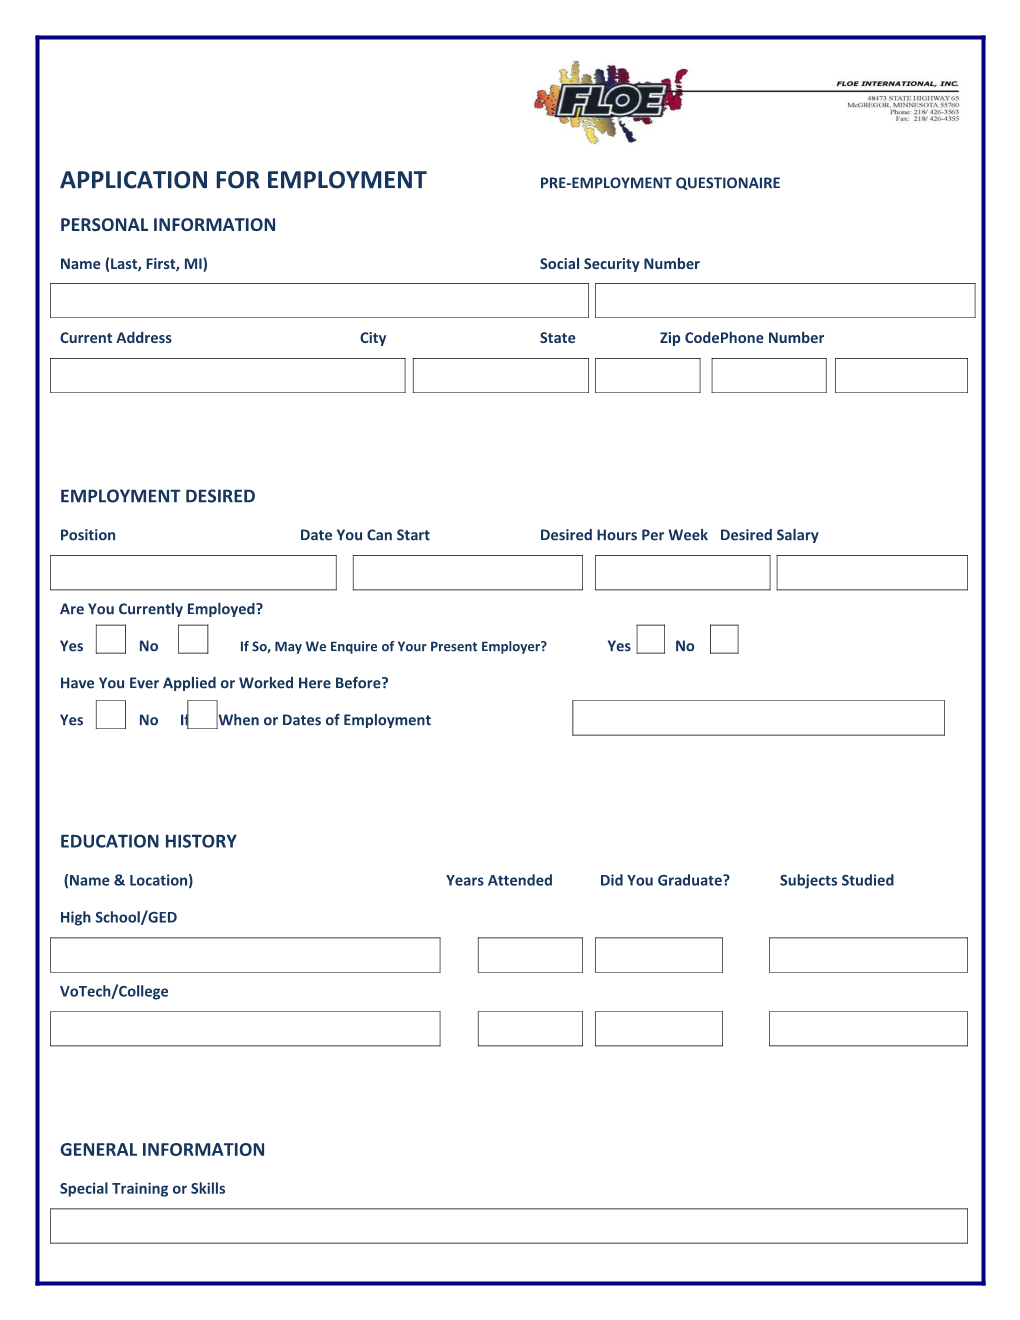 Application for Employment Pre-Employment Questionaire